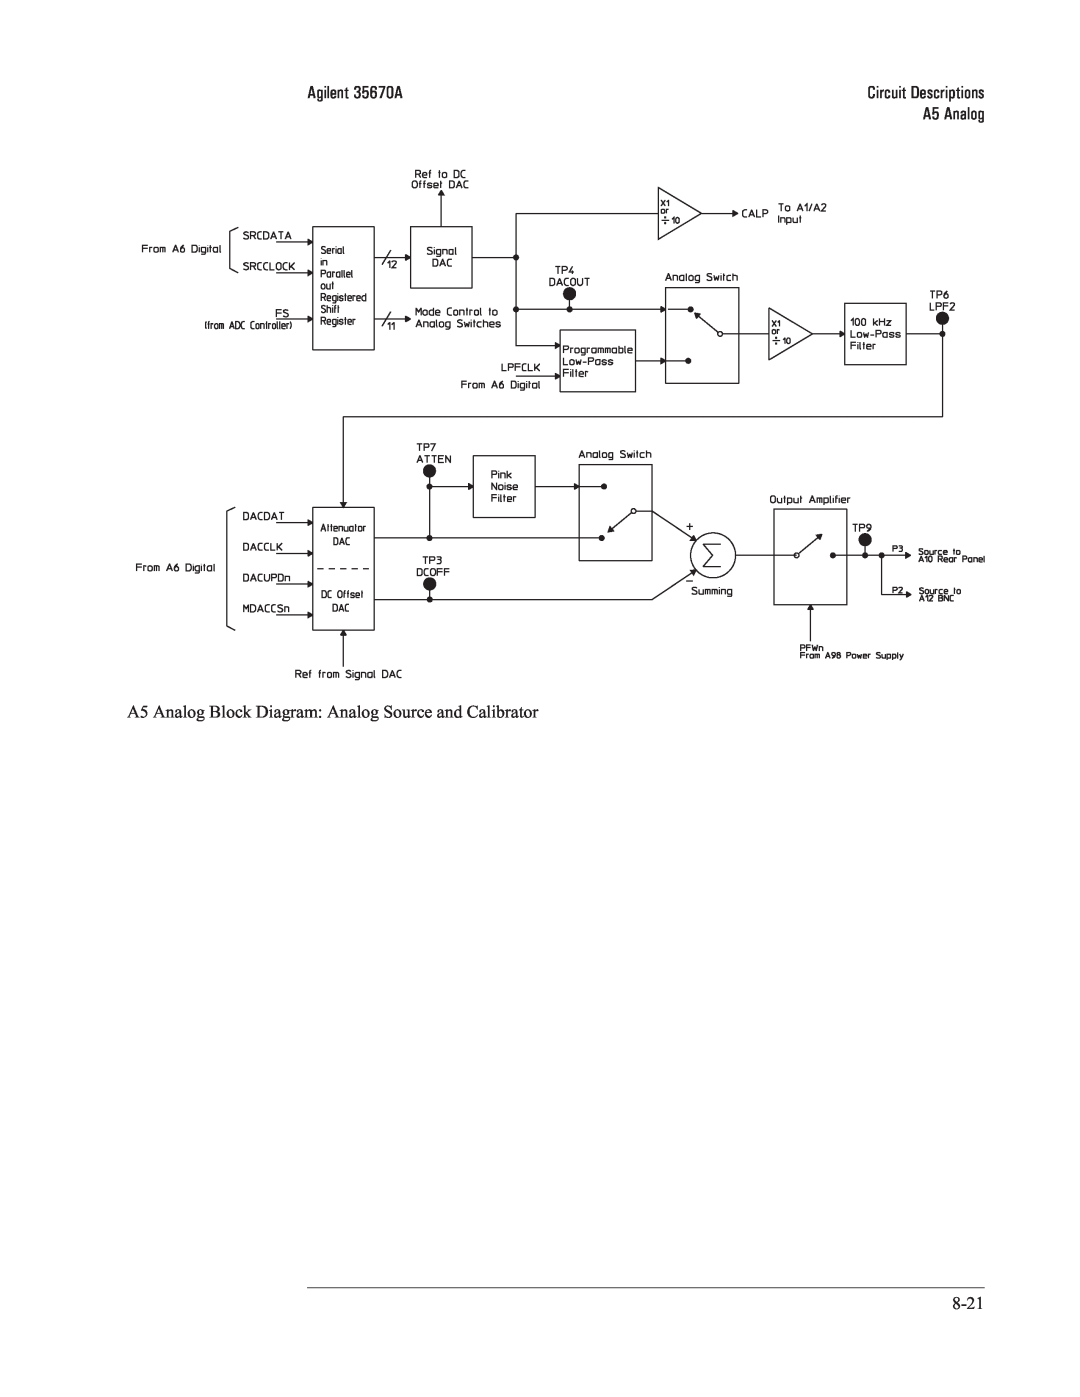 Agilent Technologies 35670-90066 manual Agilent 35670A, A5 Analog, Circuit Descriptions 